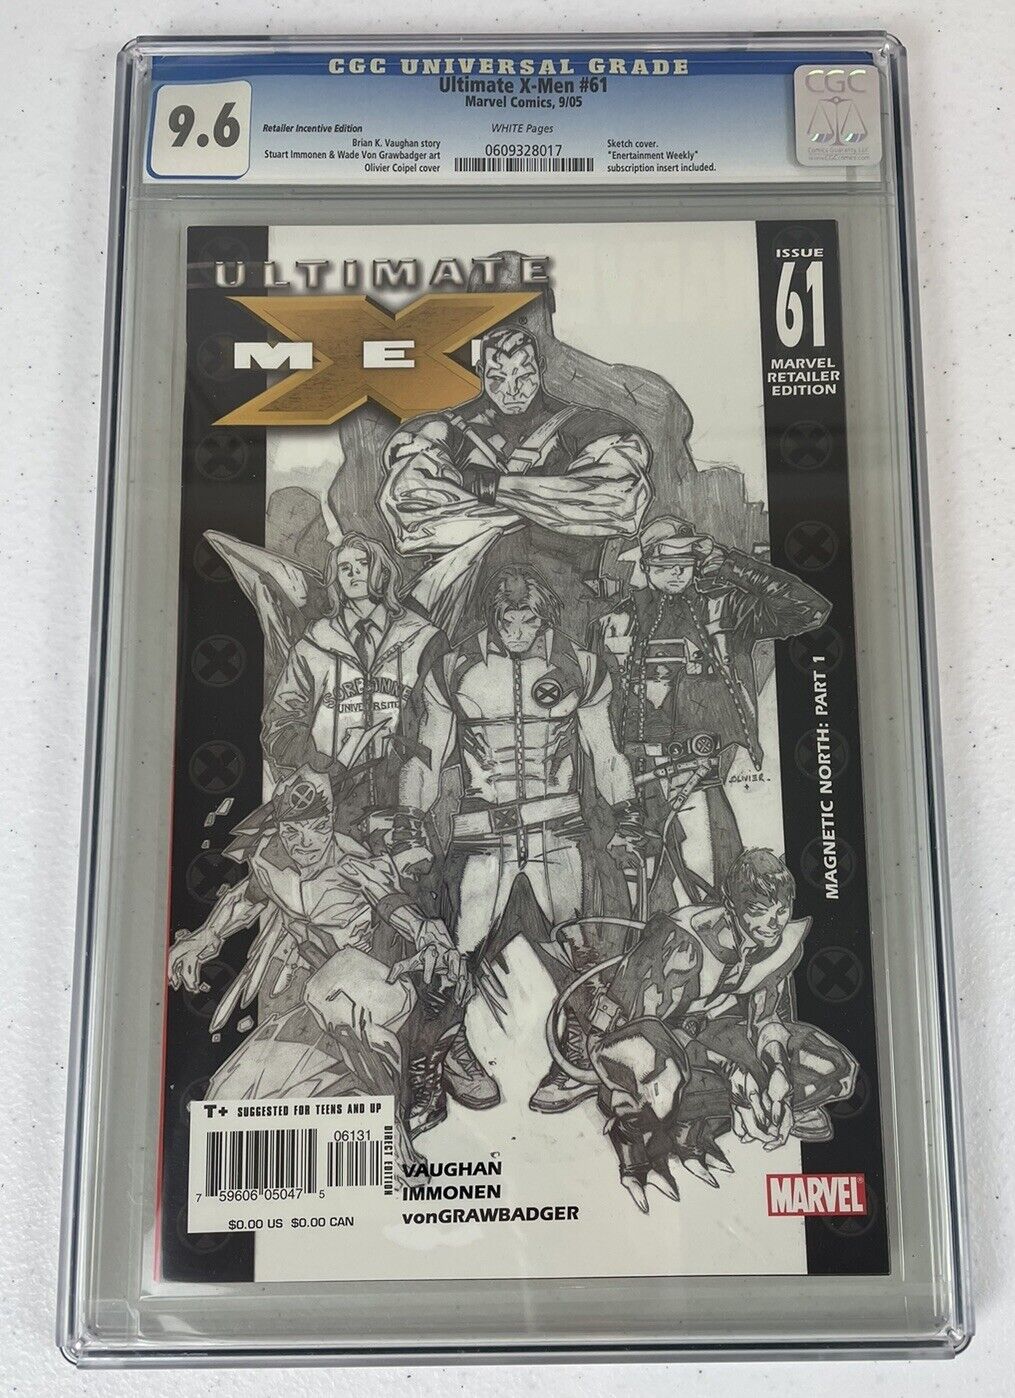 Ultimate X-Men #61 CGC 9.6 Marvel Comics Graded Limited Ed Cover Sketch Retailer